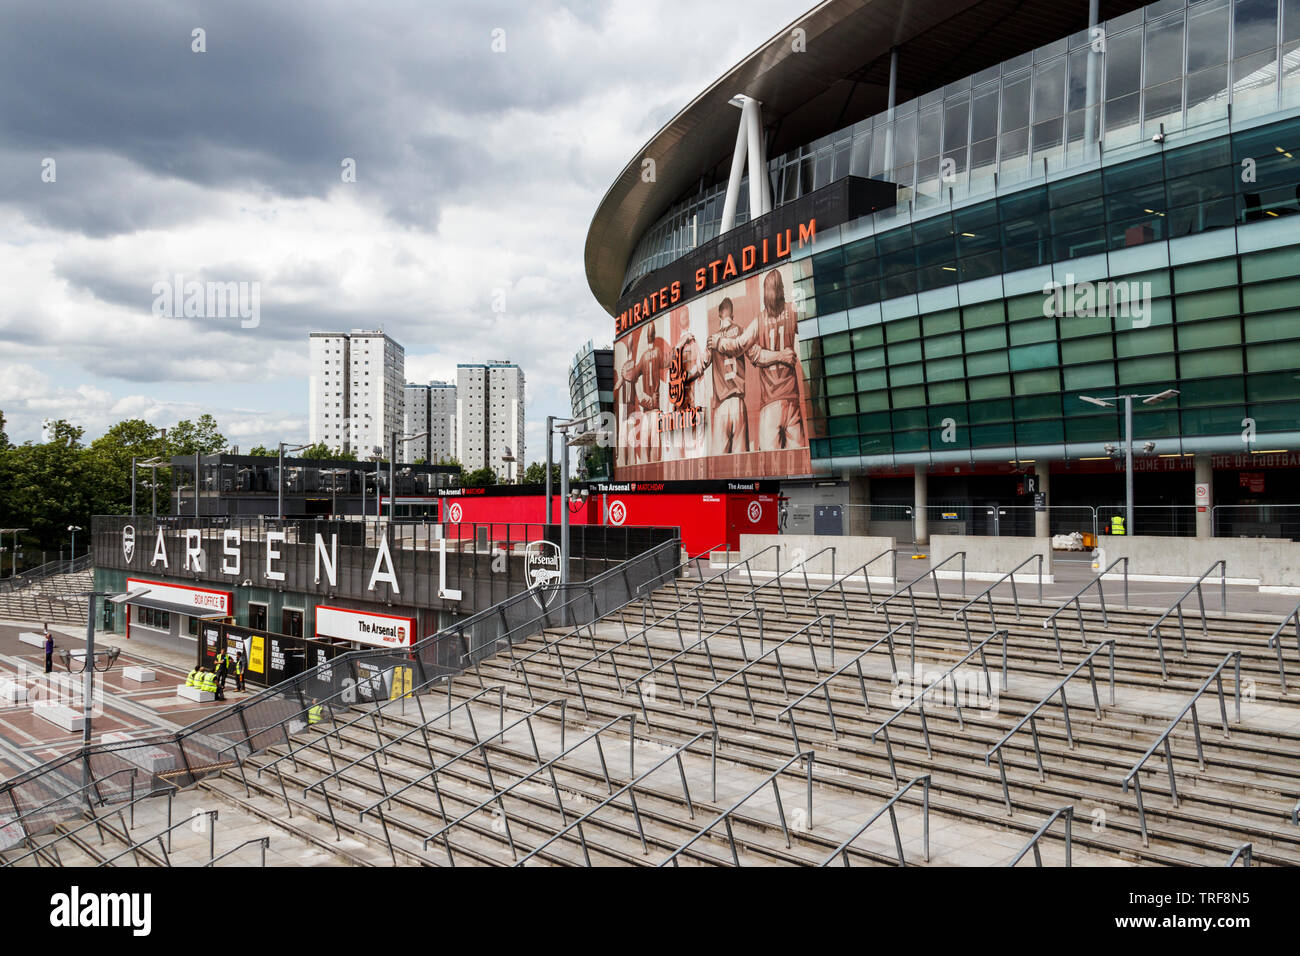 L'Emirates Stadium, casa Arsenal Football Club, Islington, Londra, Regno Unito, 2019 Foto Stock